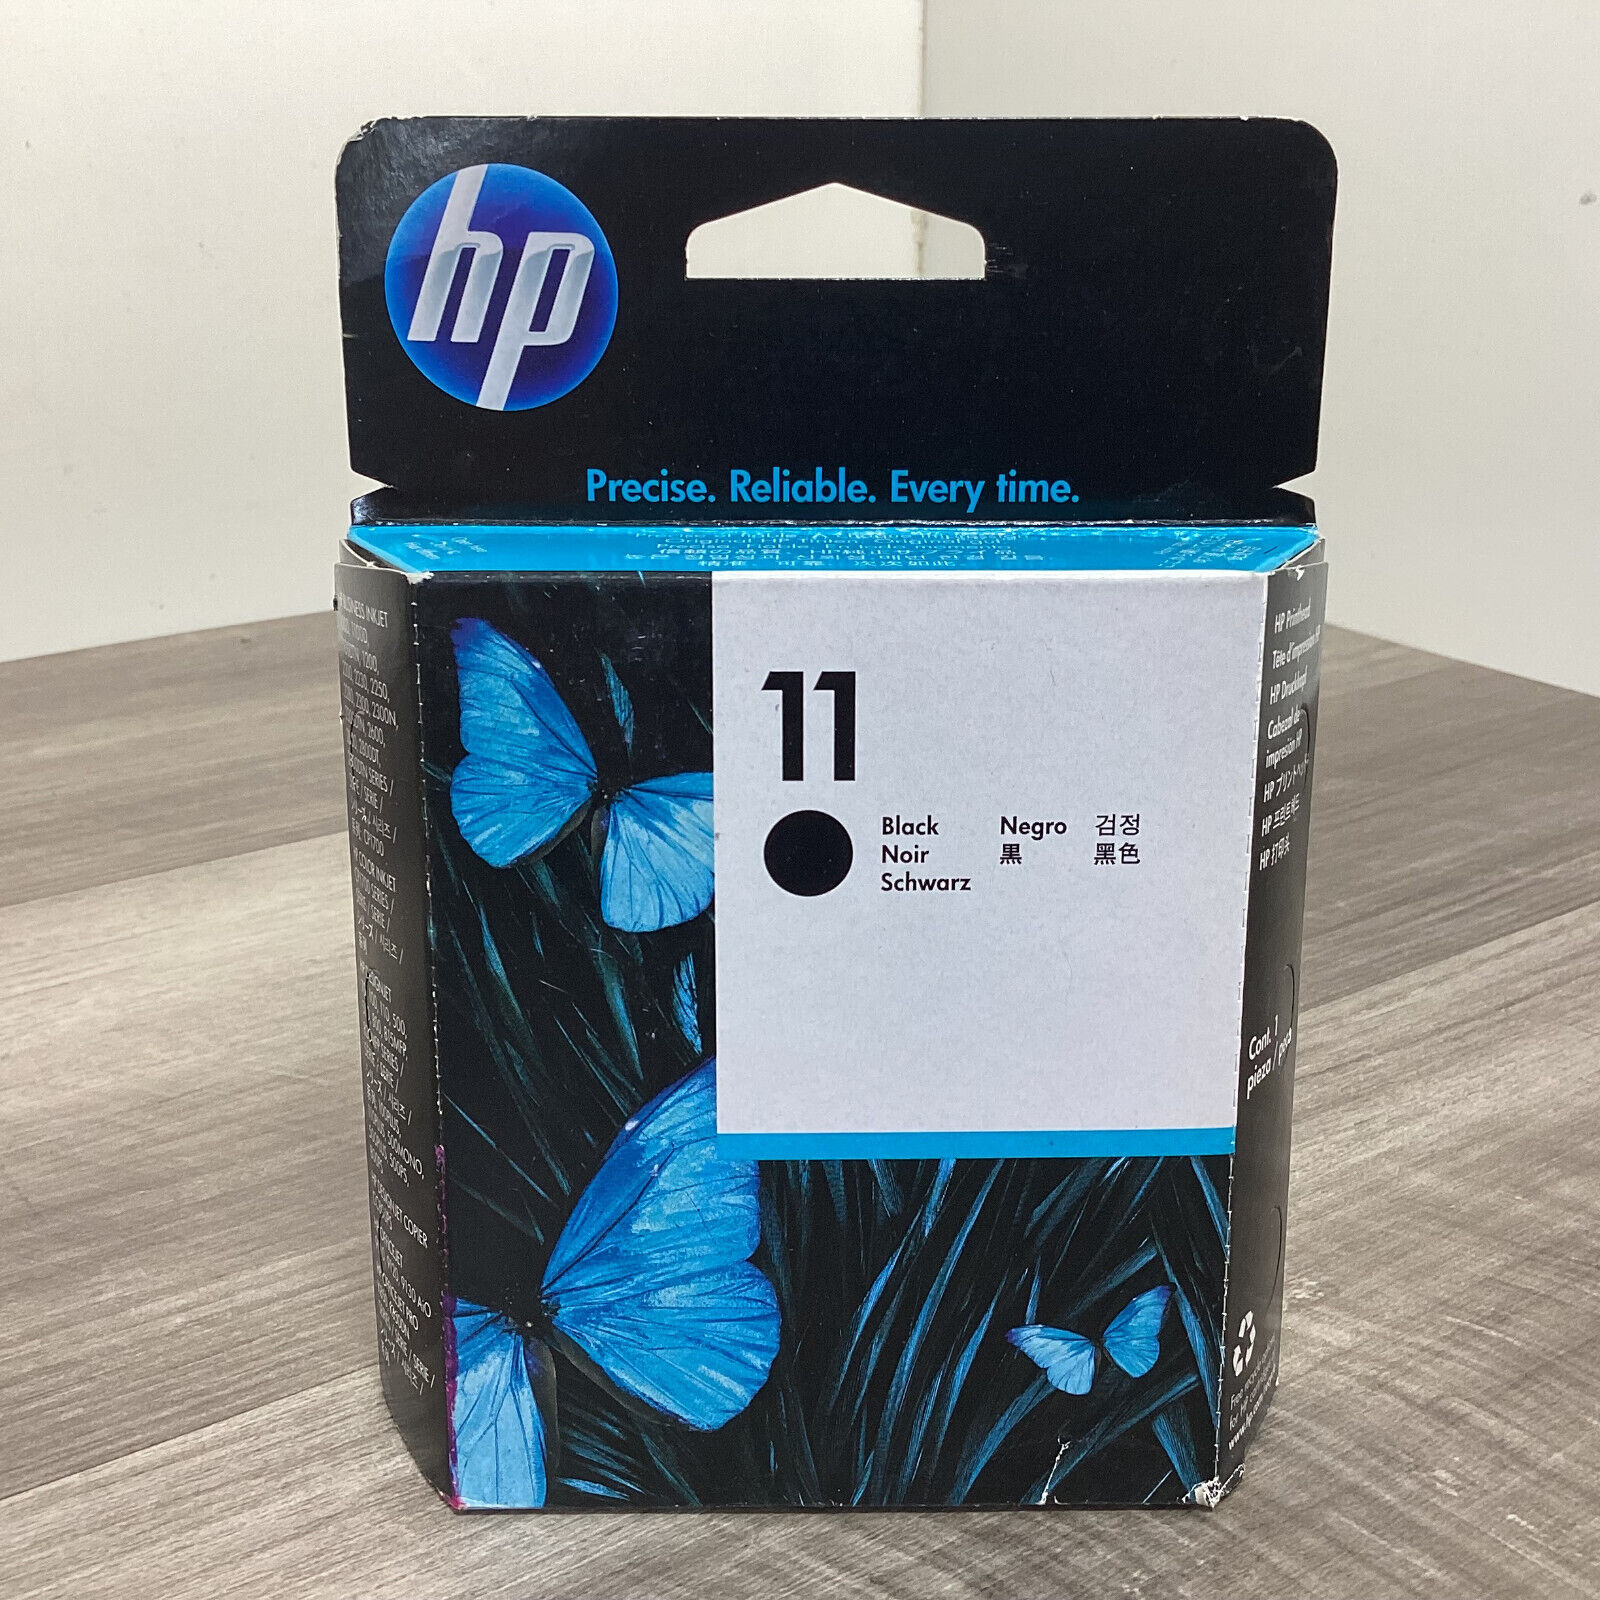 Genuine HP 11 Printhead Black C4810A - New / Sealed Box / Exp 03/2014 / Nice